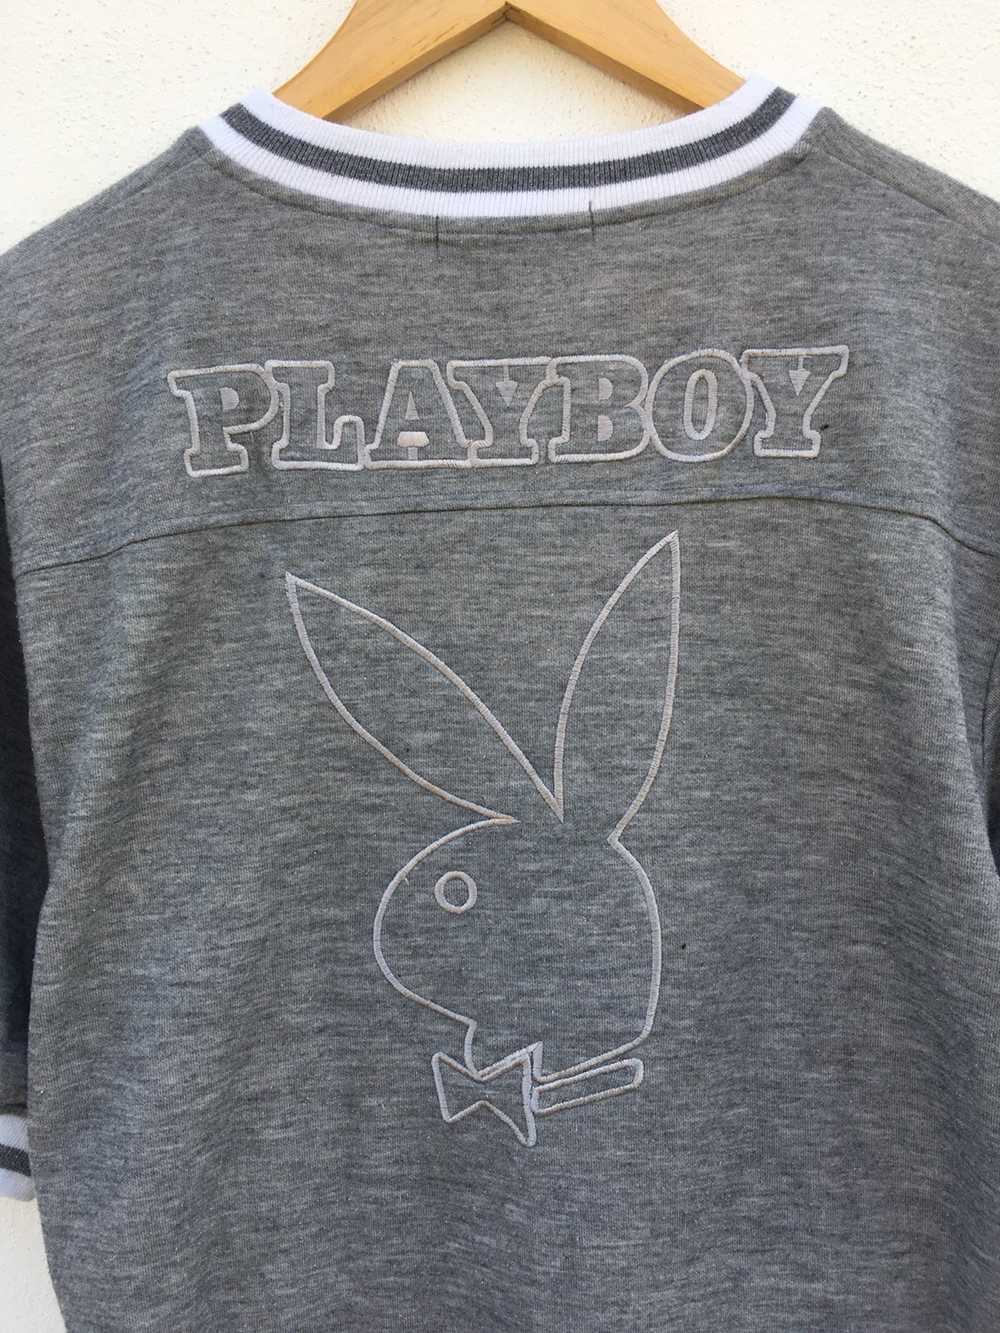 Playboy × Vintage Vintage 90s Playboy Shirt. Big … - image 7